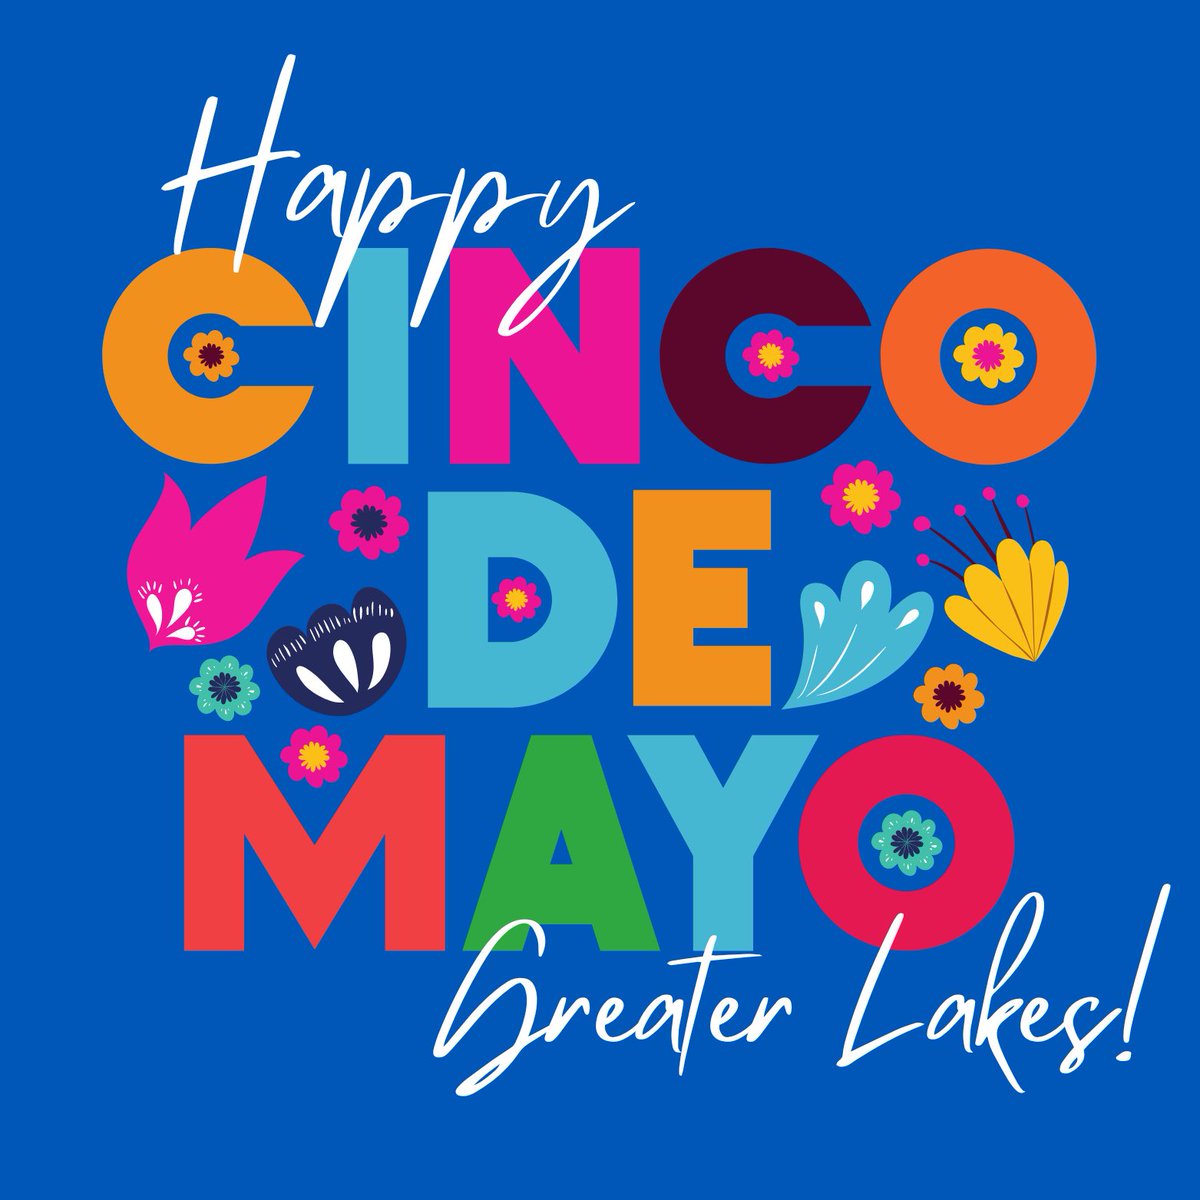 Happy Cinco De Mayo, Greater Lakes! Enjoy a beautiful day! #MakingWaves